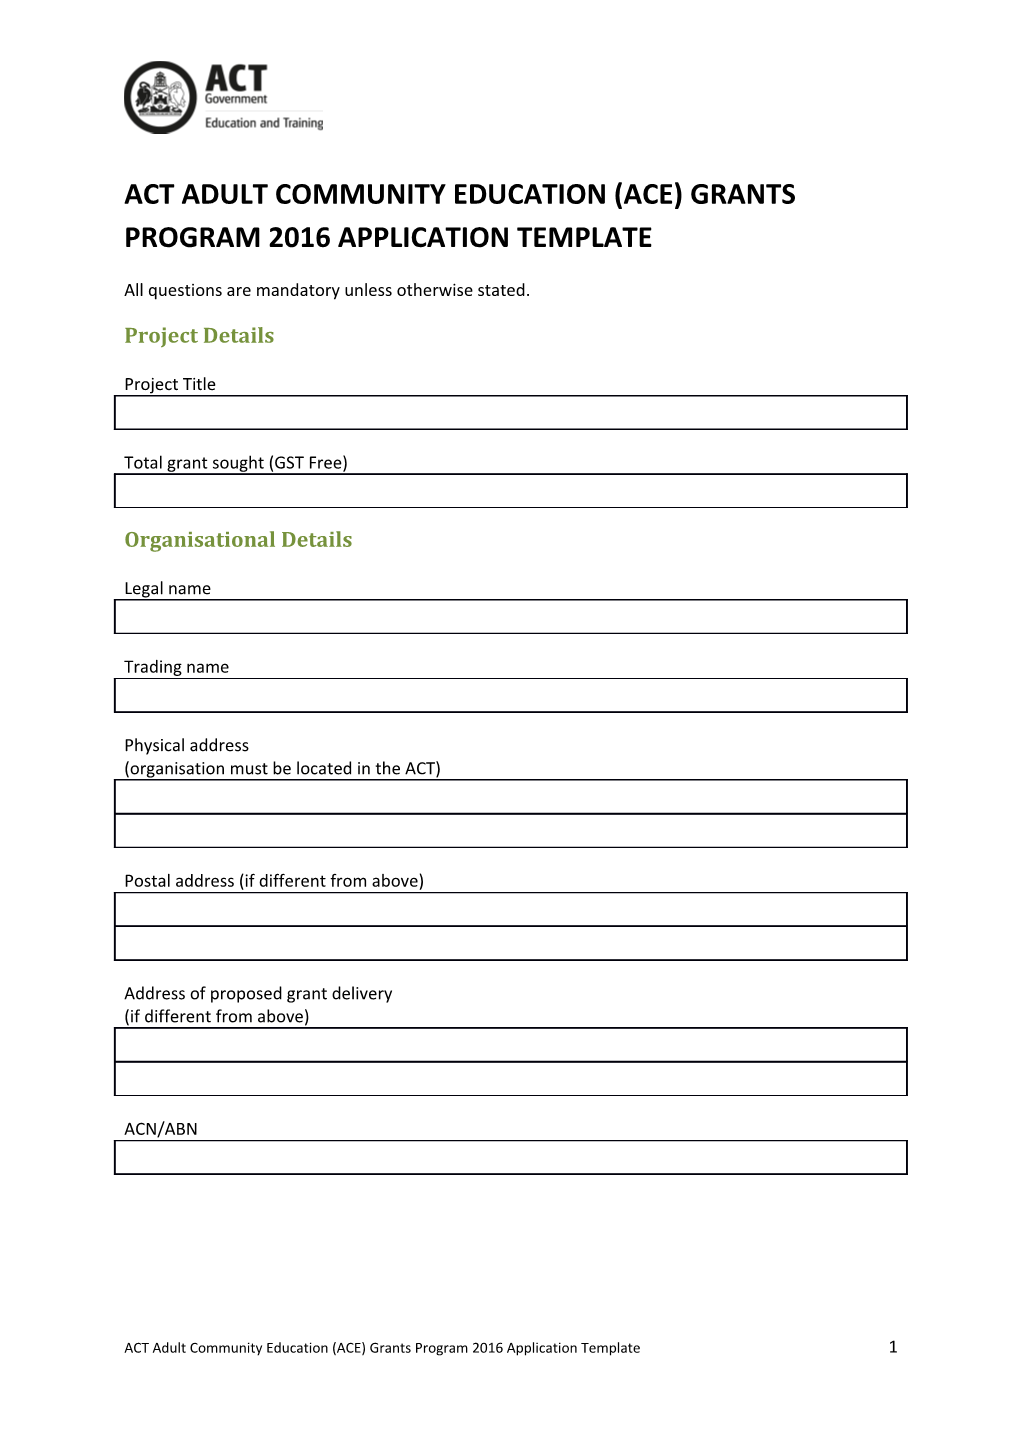 Act Adult Community Education (Ace) Grants Program 2016 Application Template